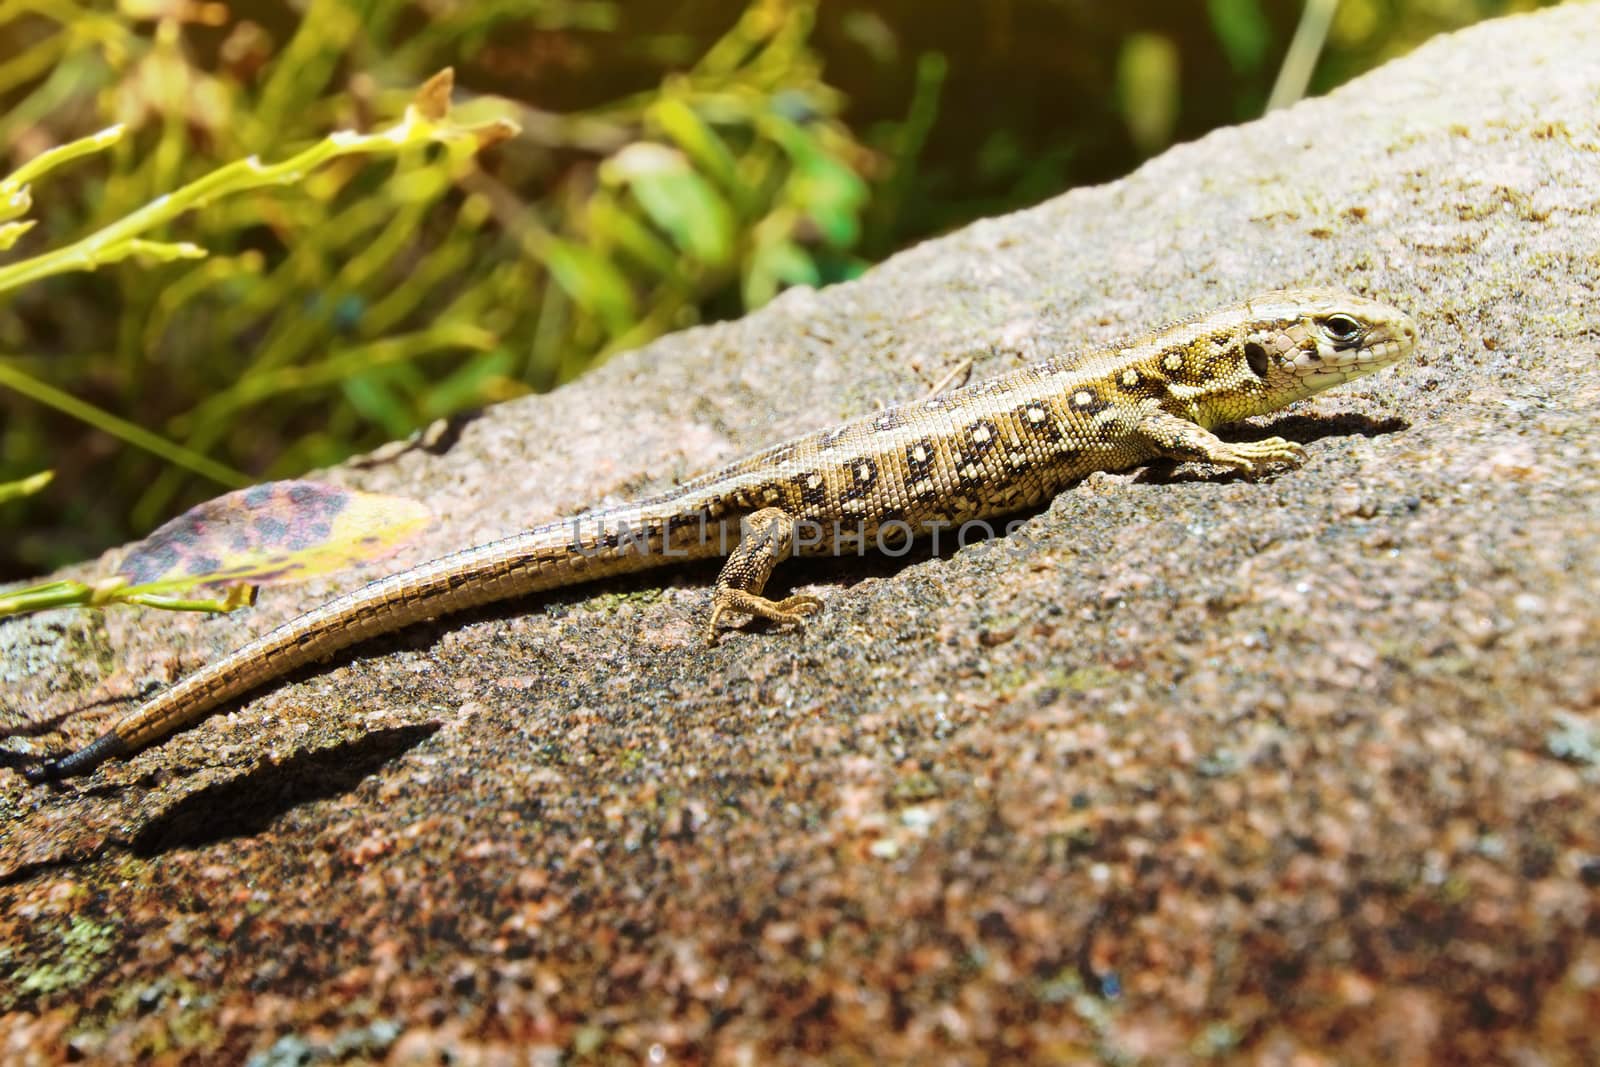 Lizard on the rock. Reptile animal image.